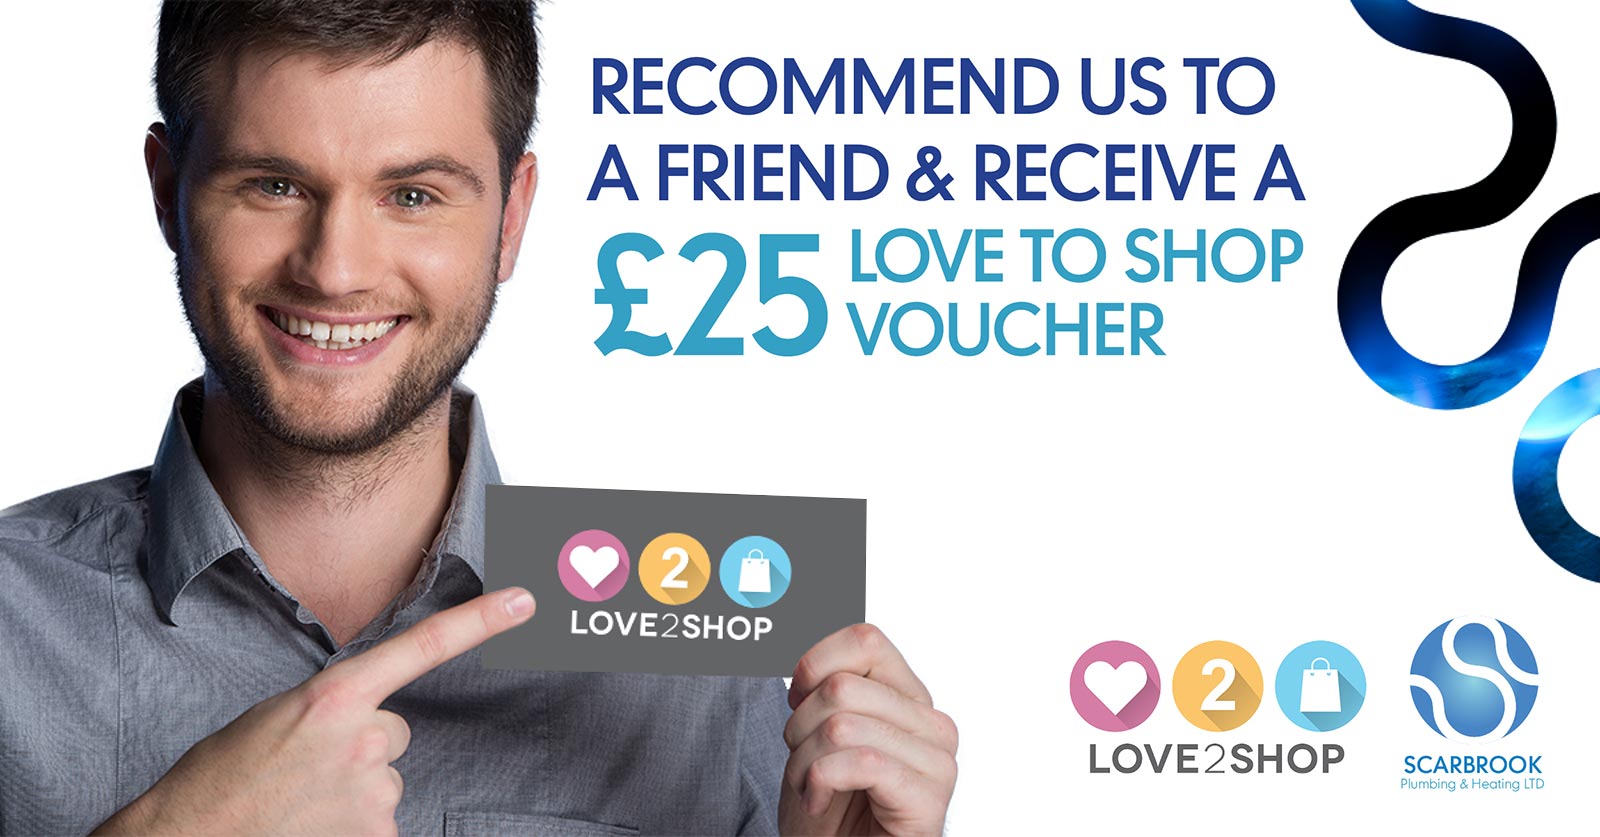 Love 2 Shop Voucher a Friend